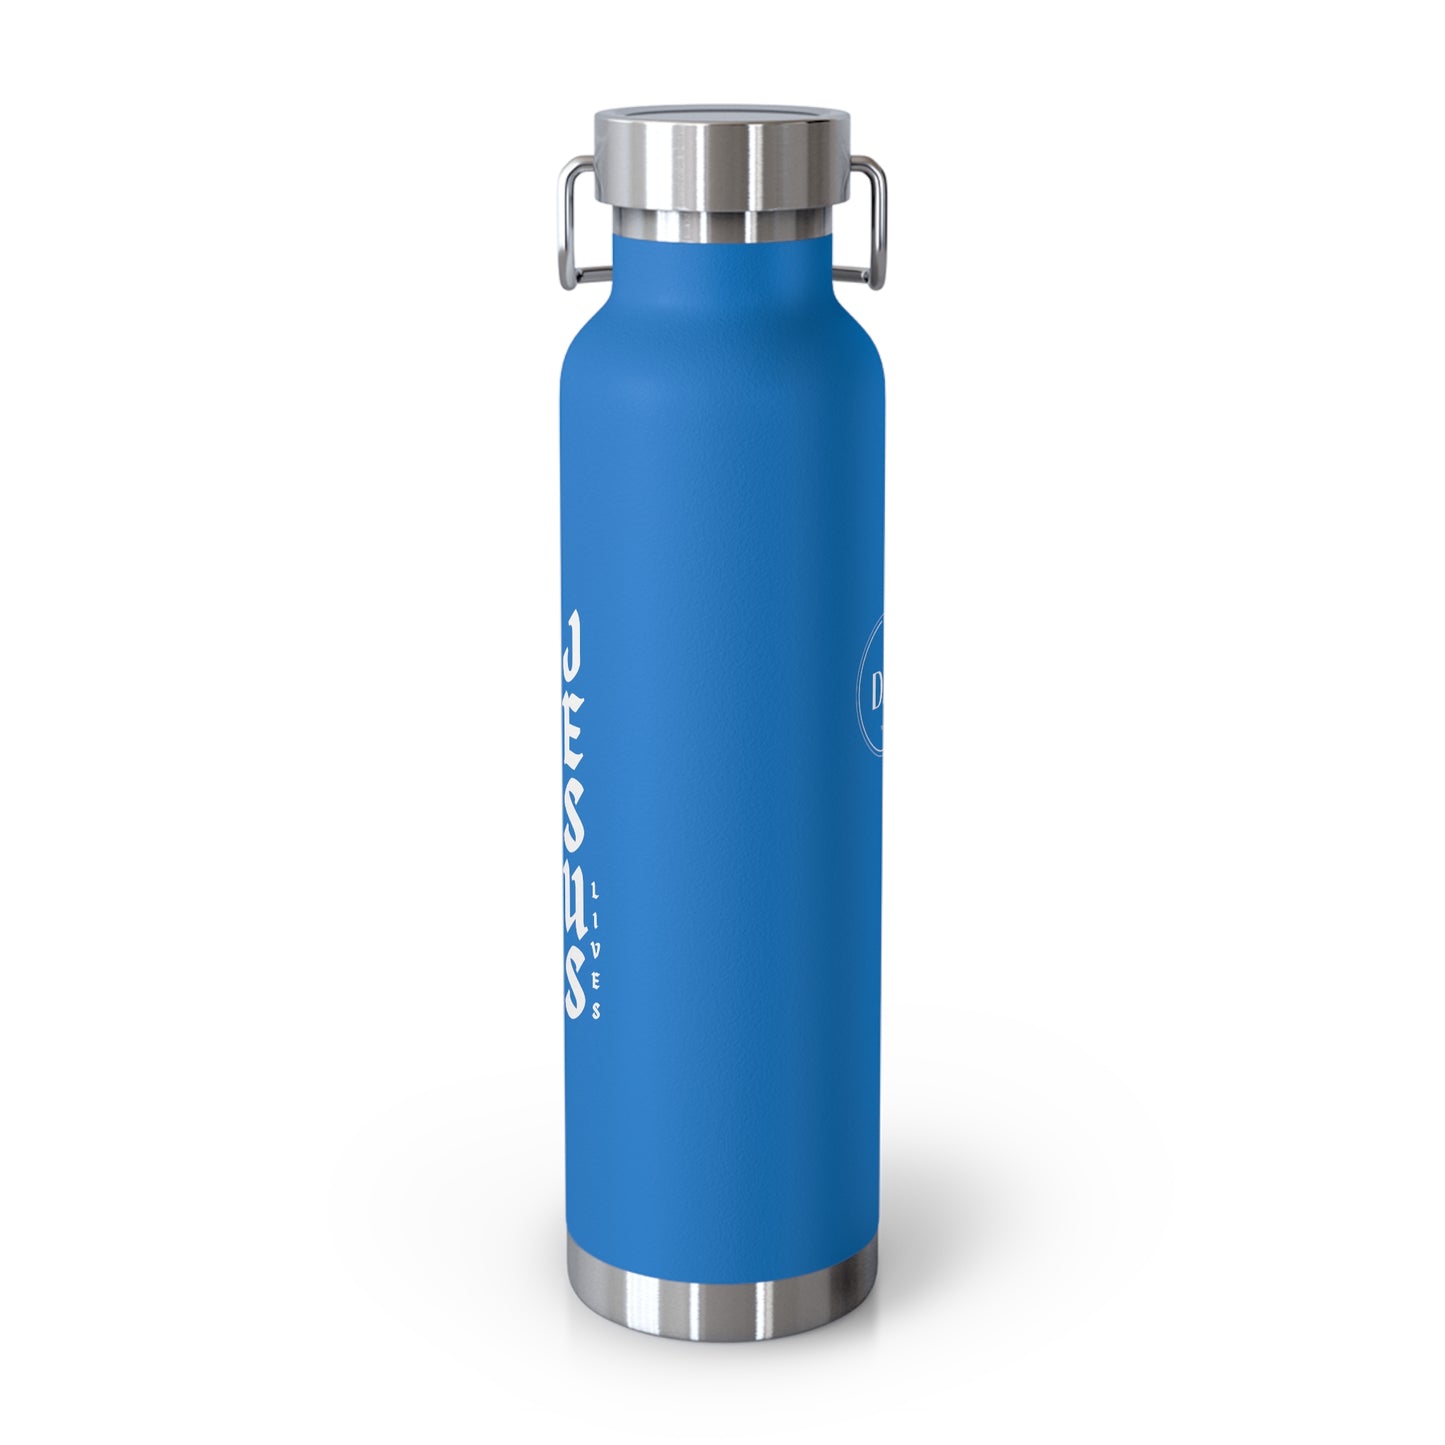 DM - Copper Vacuum Insulated Bottle, 22oz